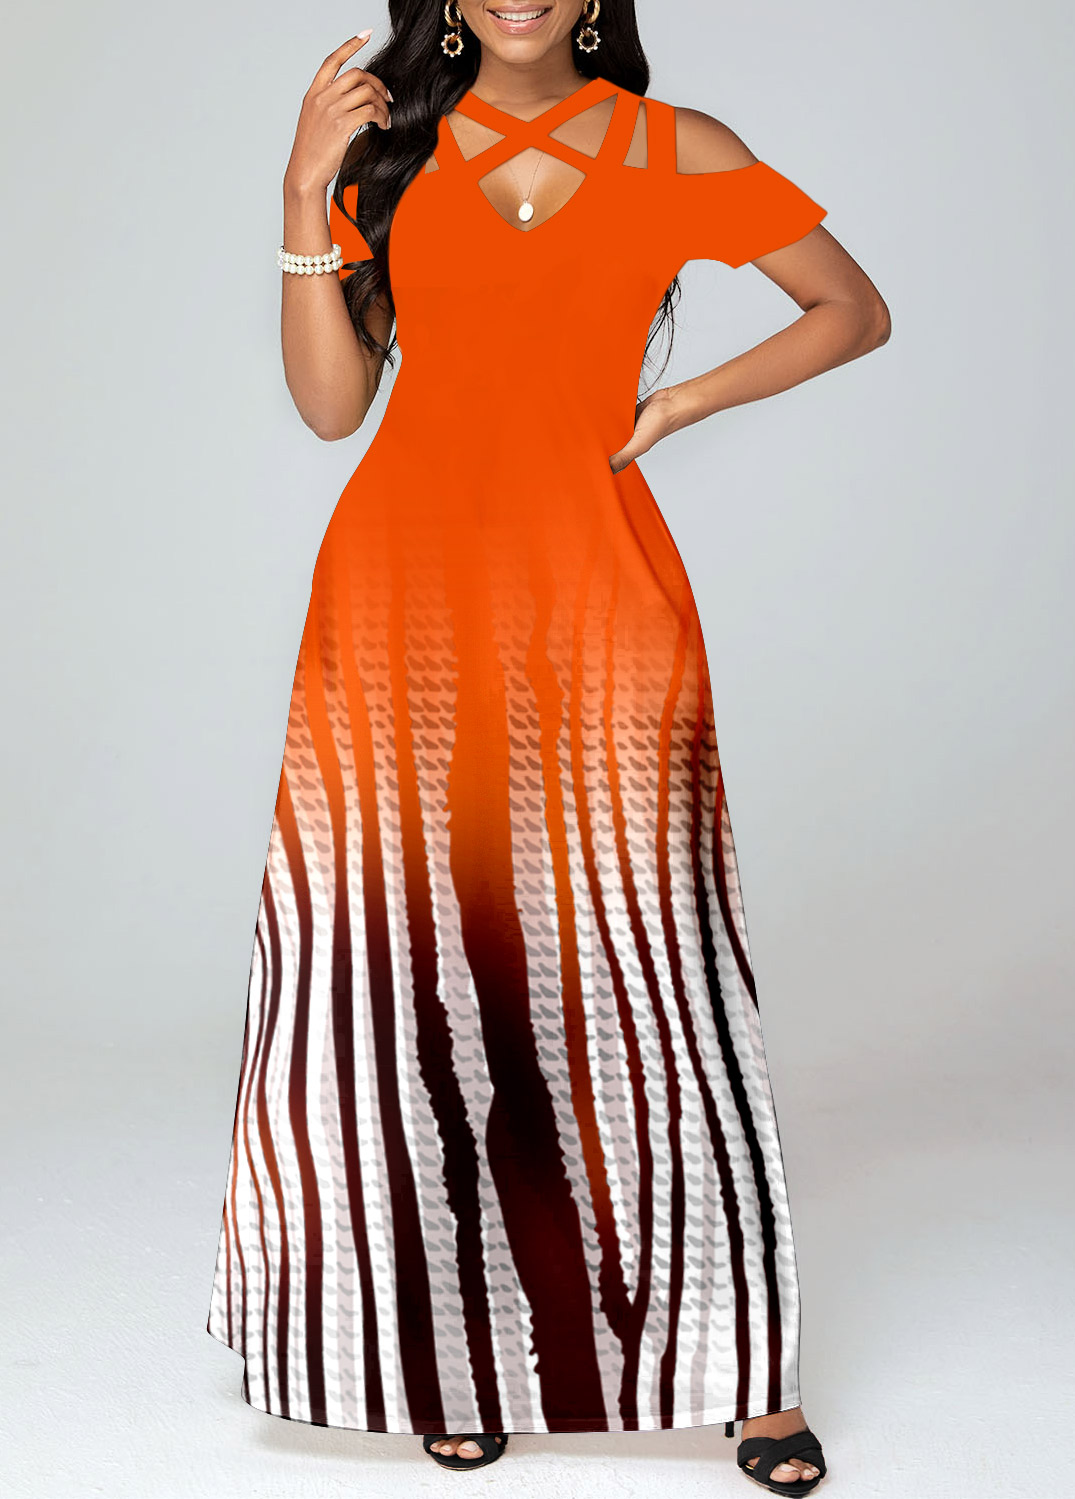 Ombre Criss Cross Orange Maxi Dress